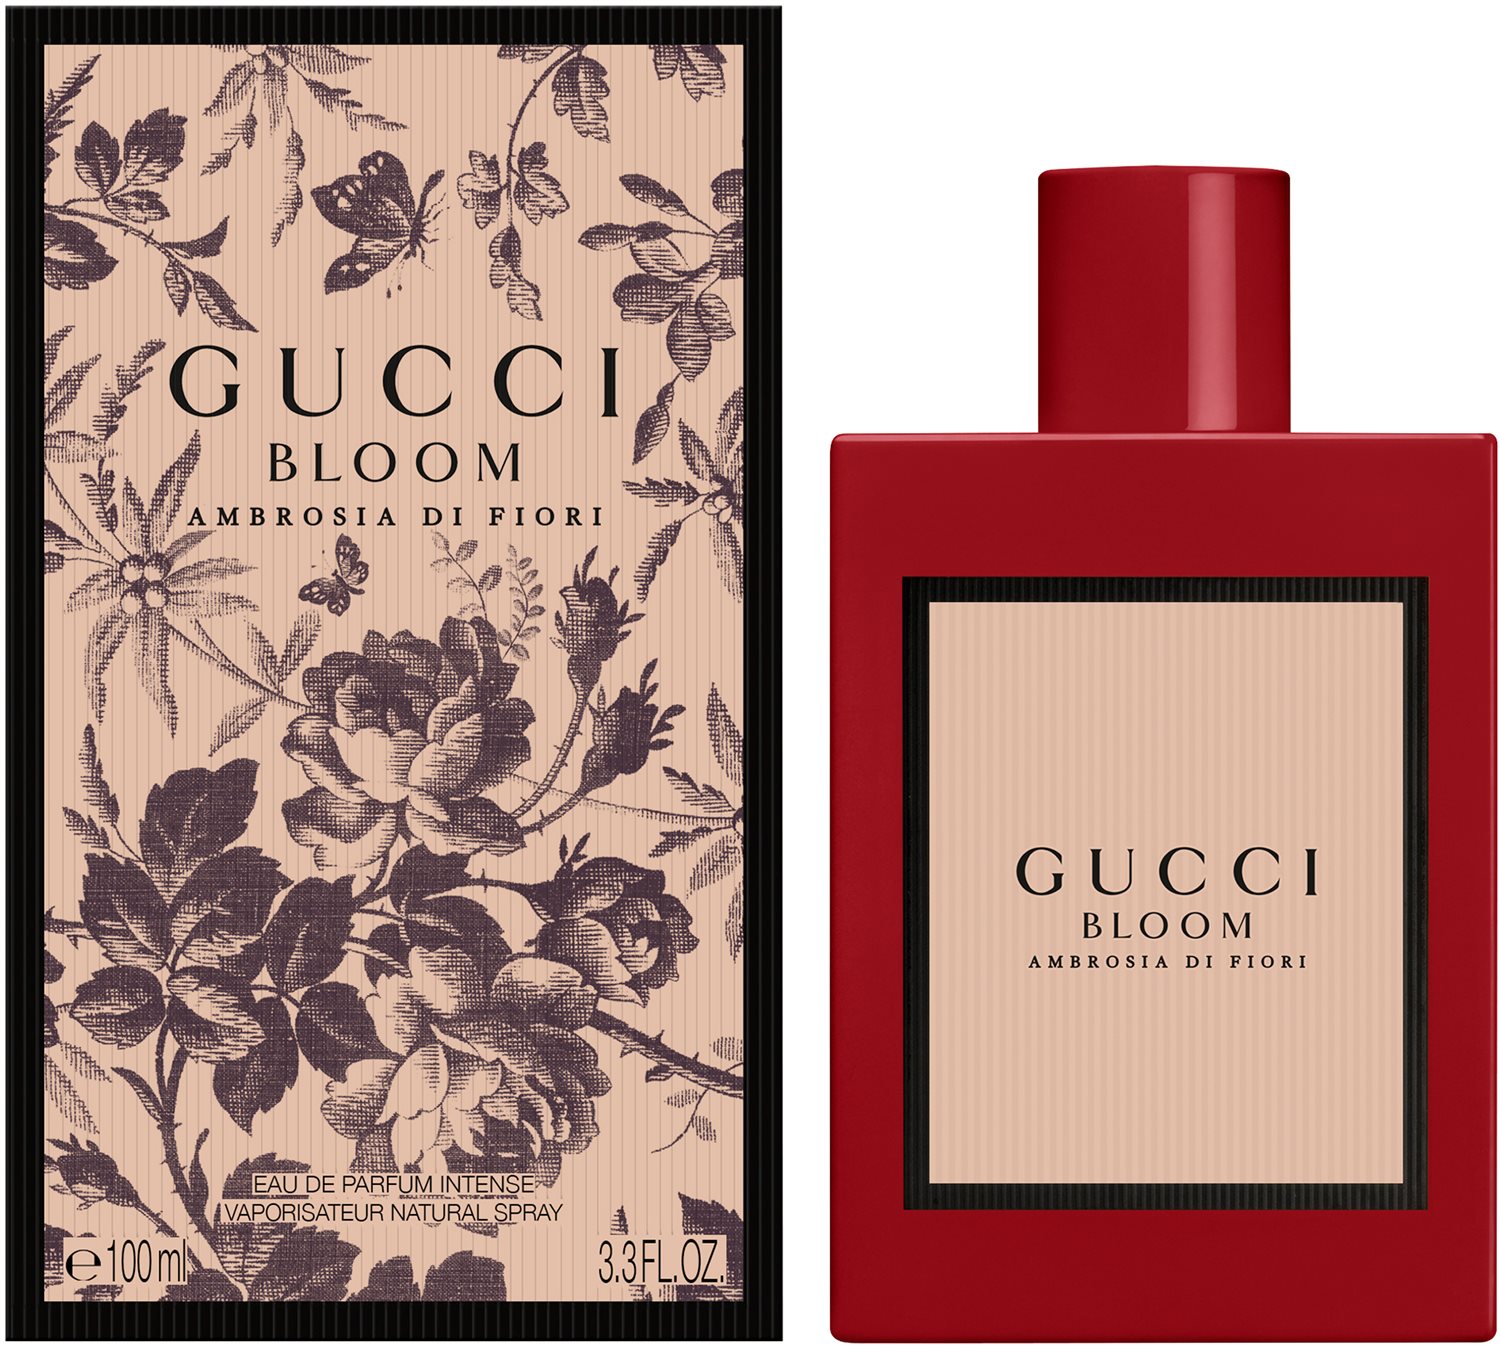 Antipoison Savant krølle Gucci Bloom Ambrosia Di Fiori 100 ml Eau De Parfum Intense